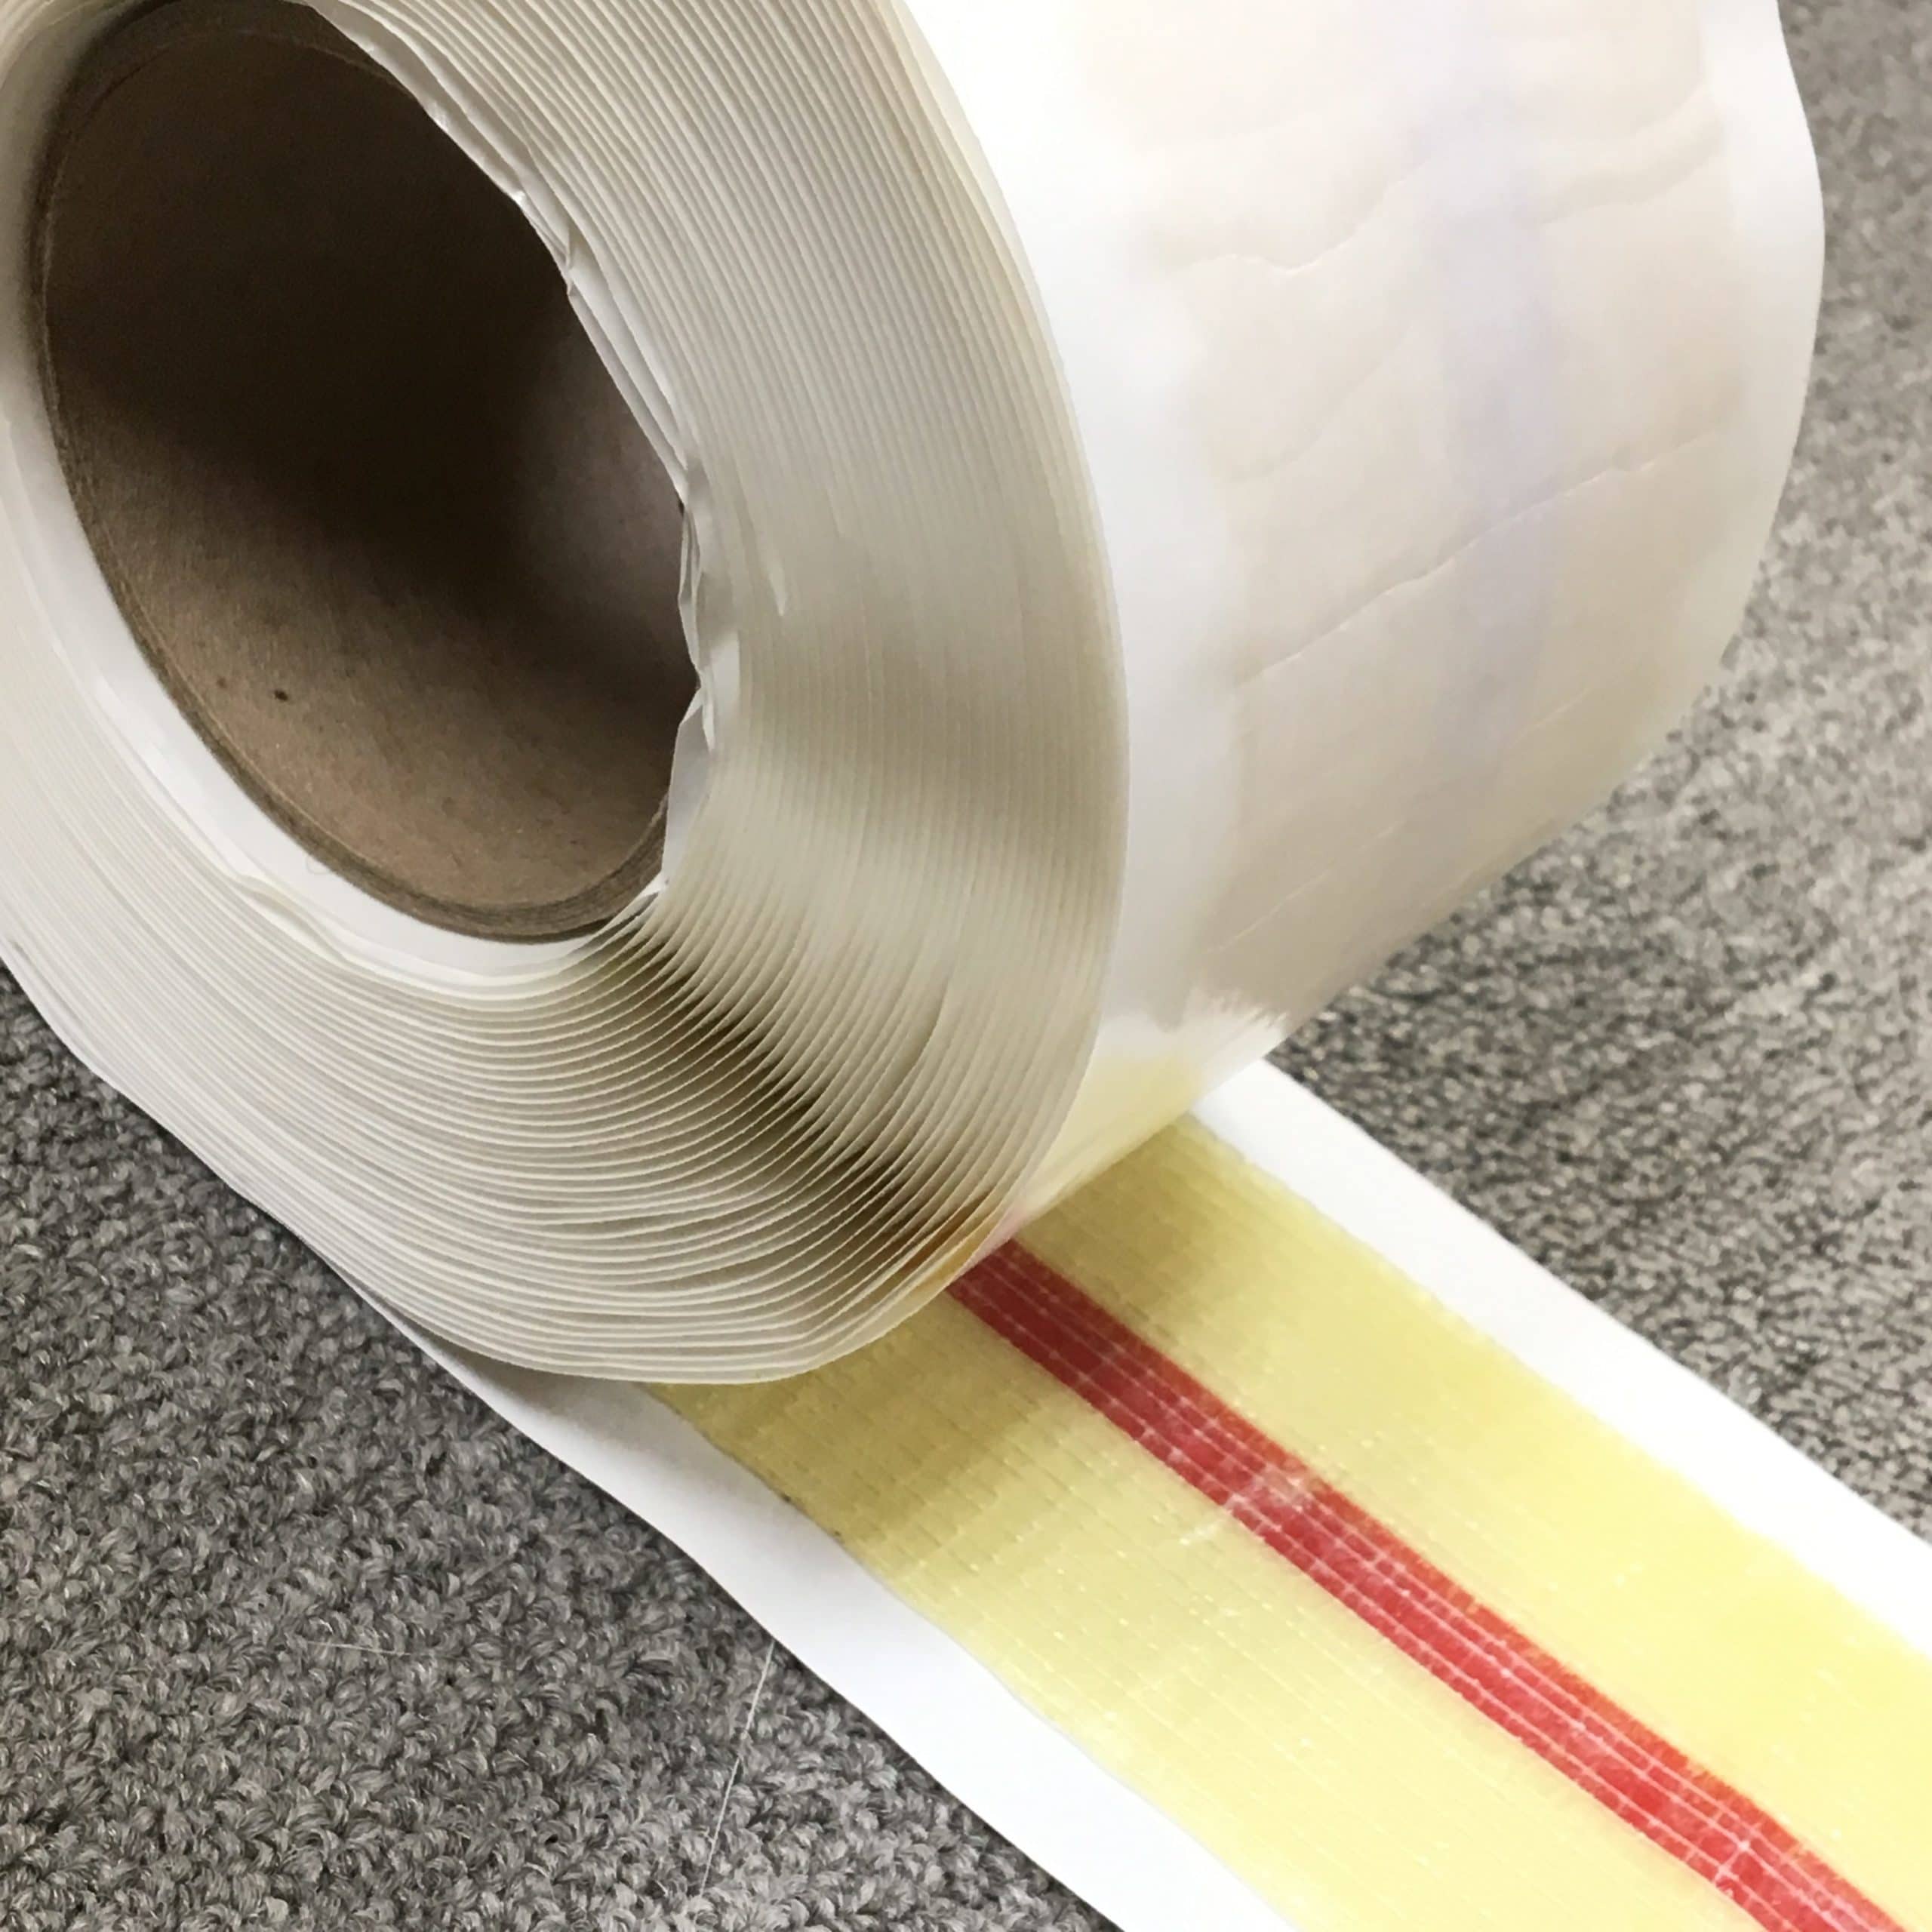 New & Improved 3 Bond Turf Back Seam Tape (now fiberglass reinforced)